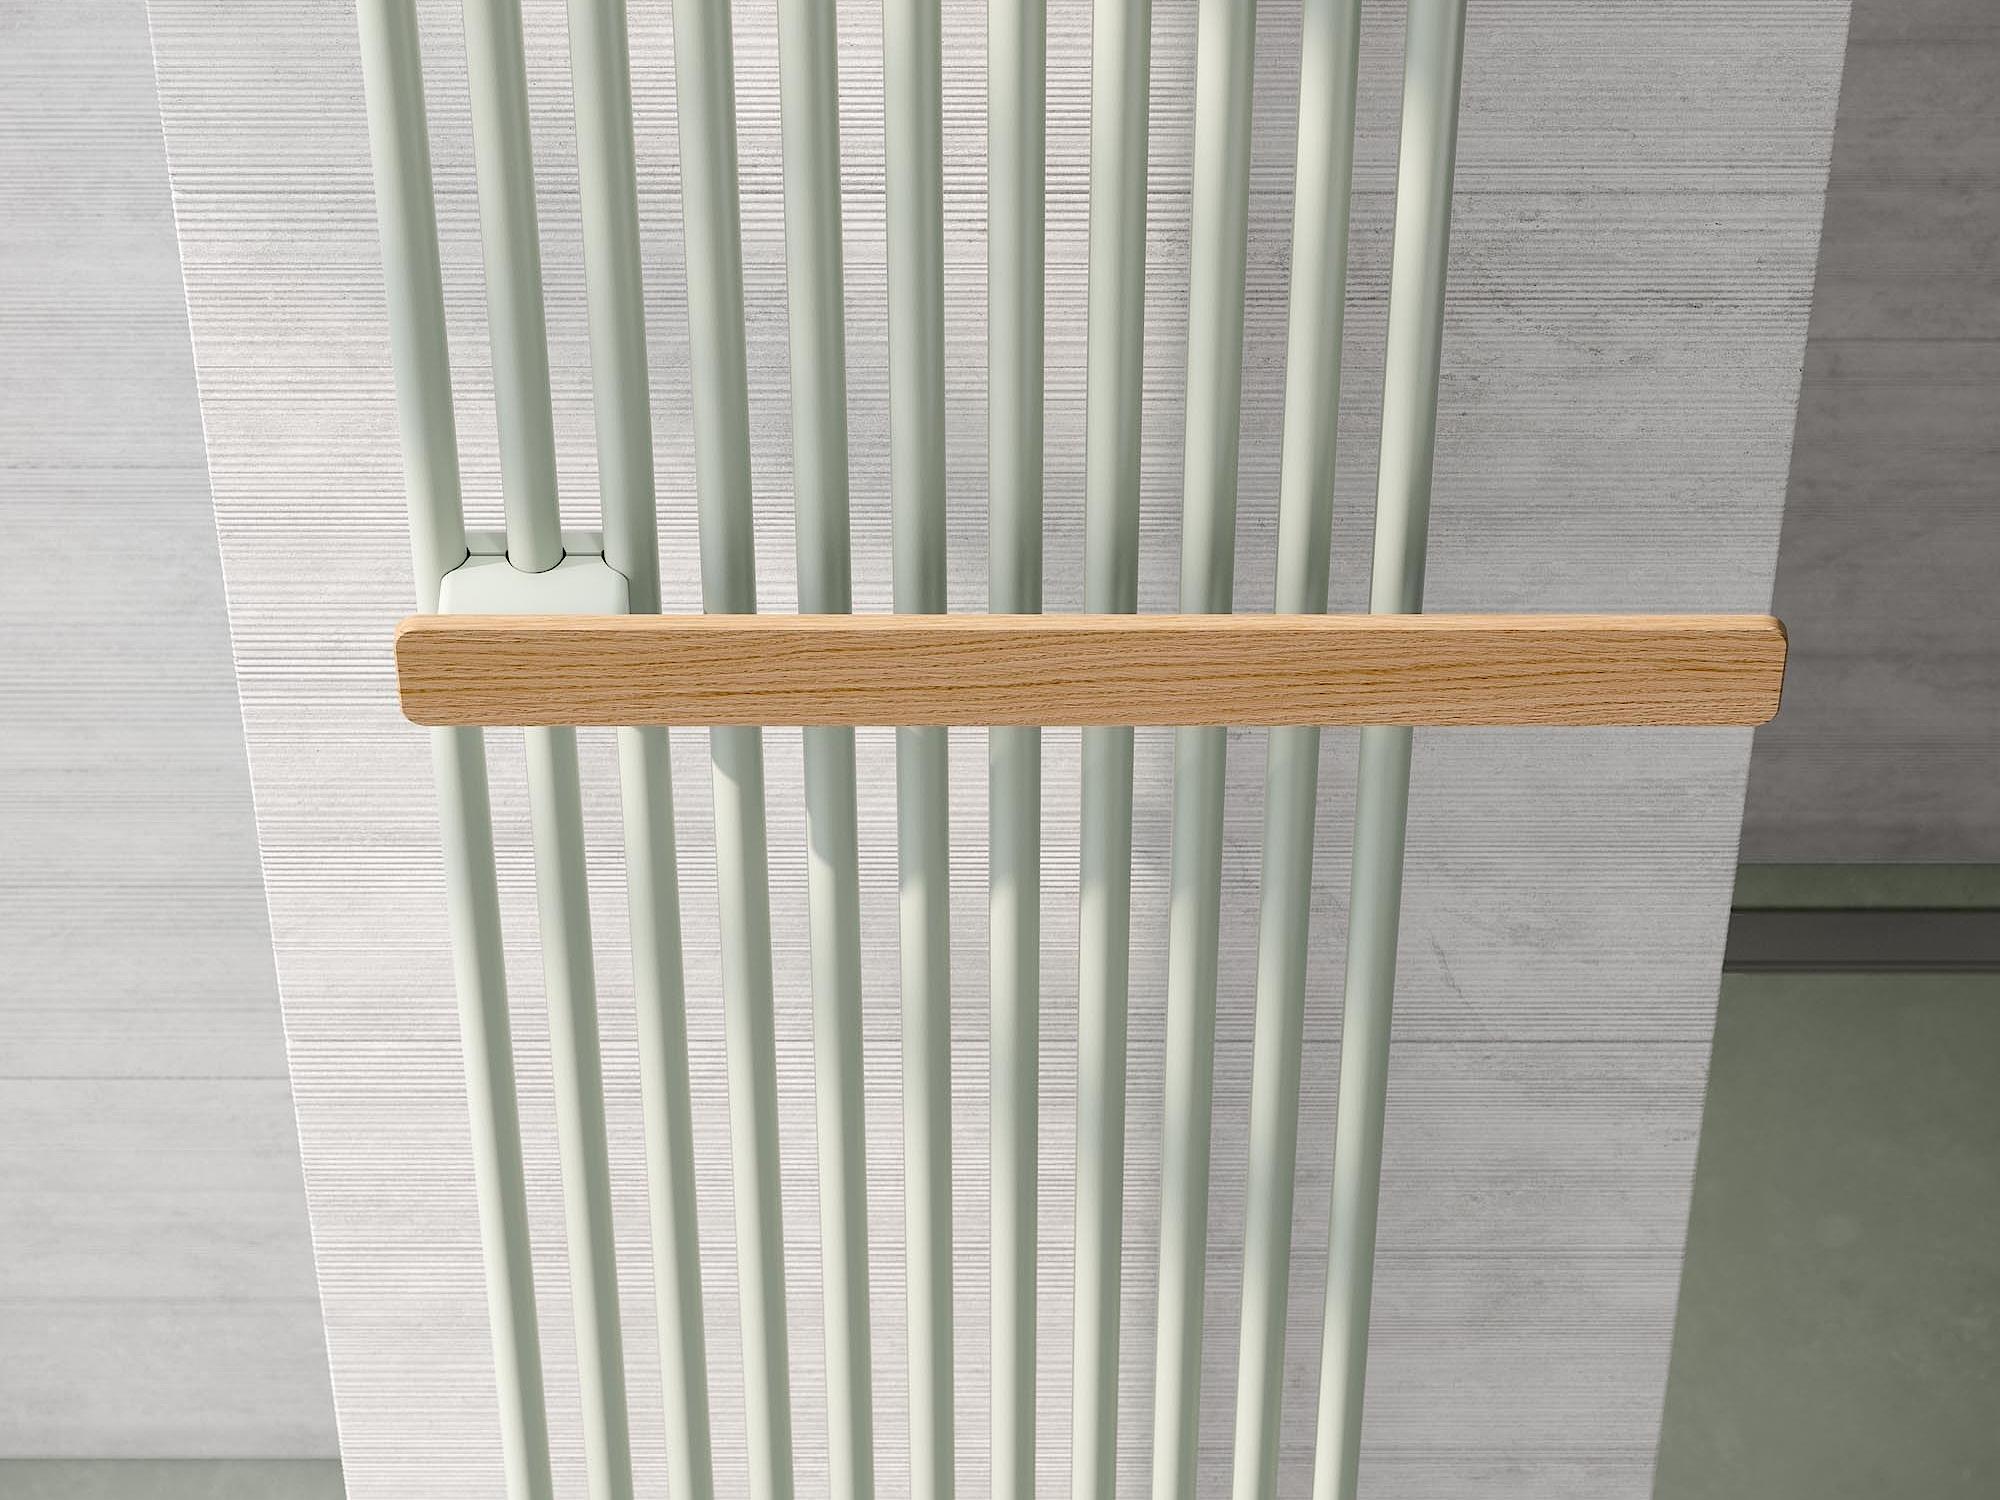 Oiled Light Oak towel rail for Kermi Pio plus design and bathroom radiators.